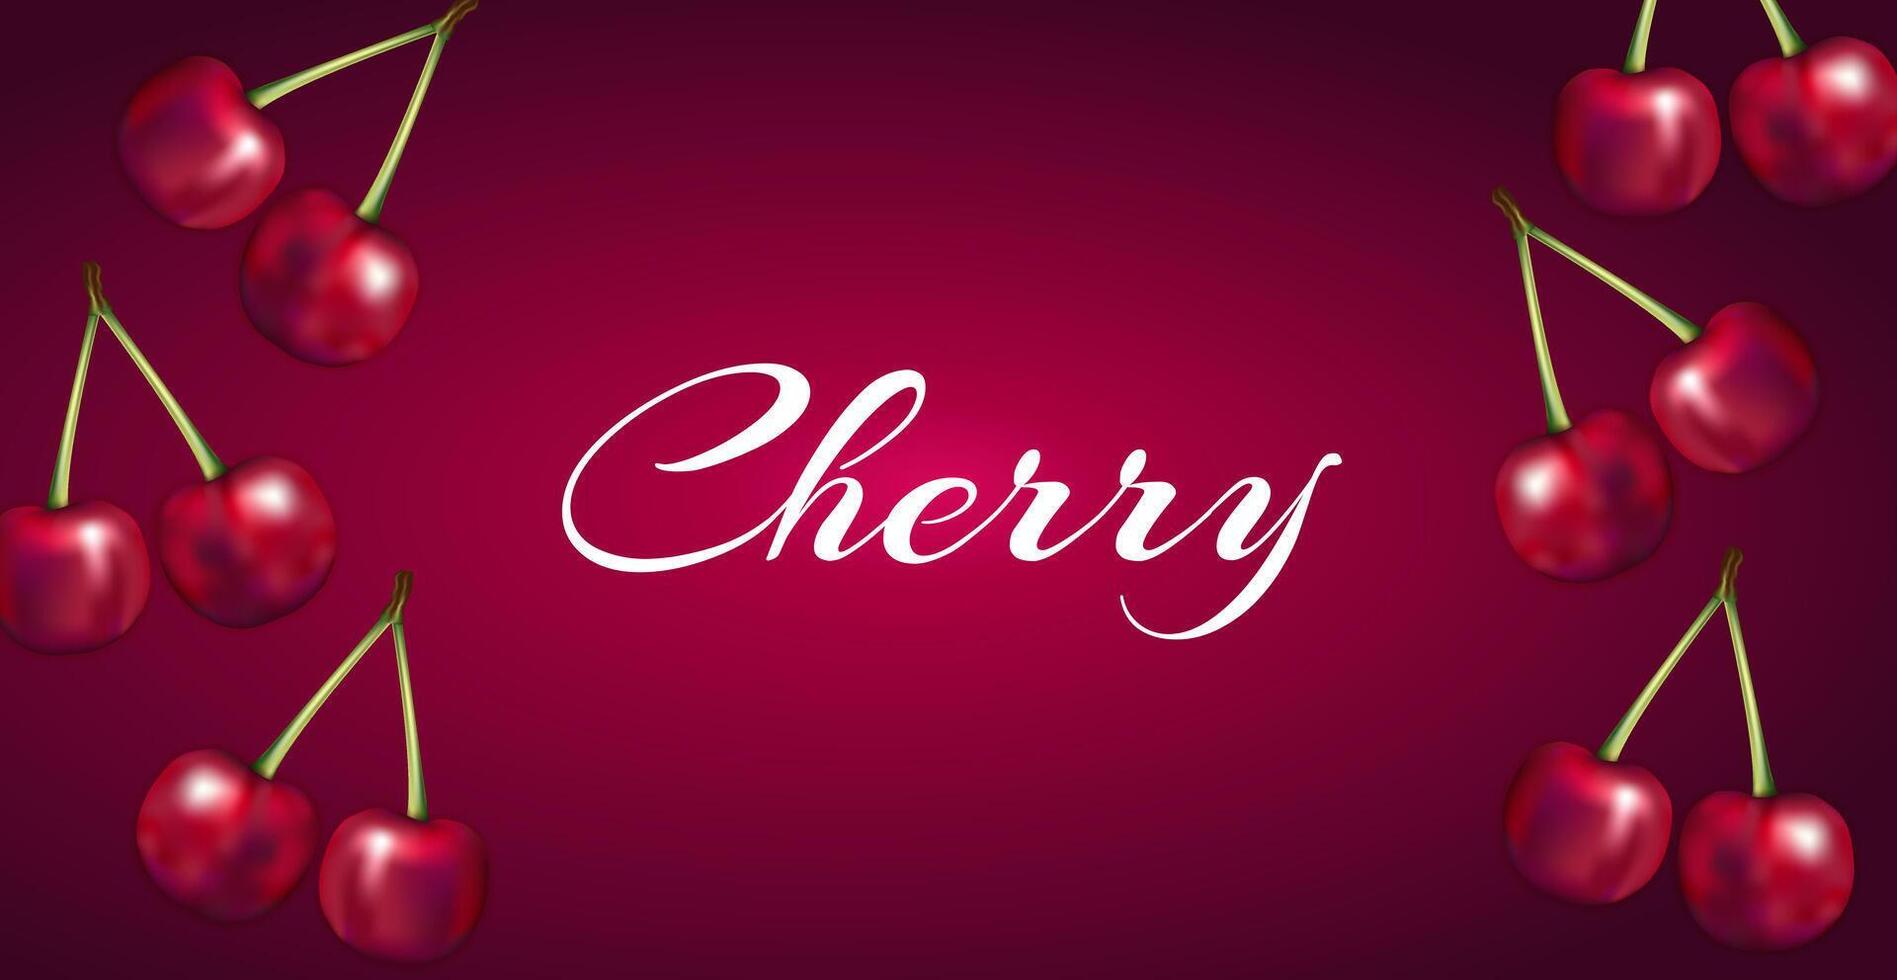 Cherry Red Fruit Background Illustration Banner vector